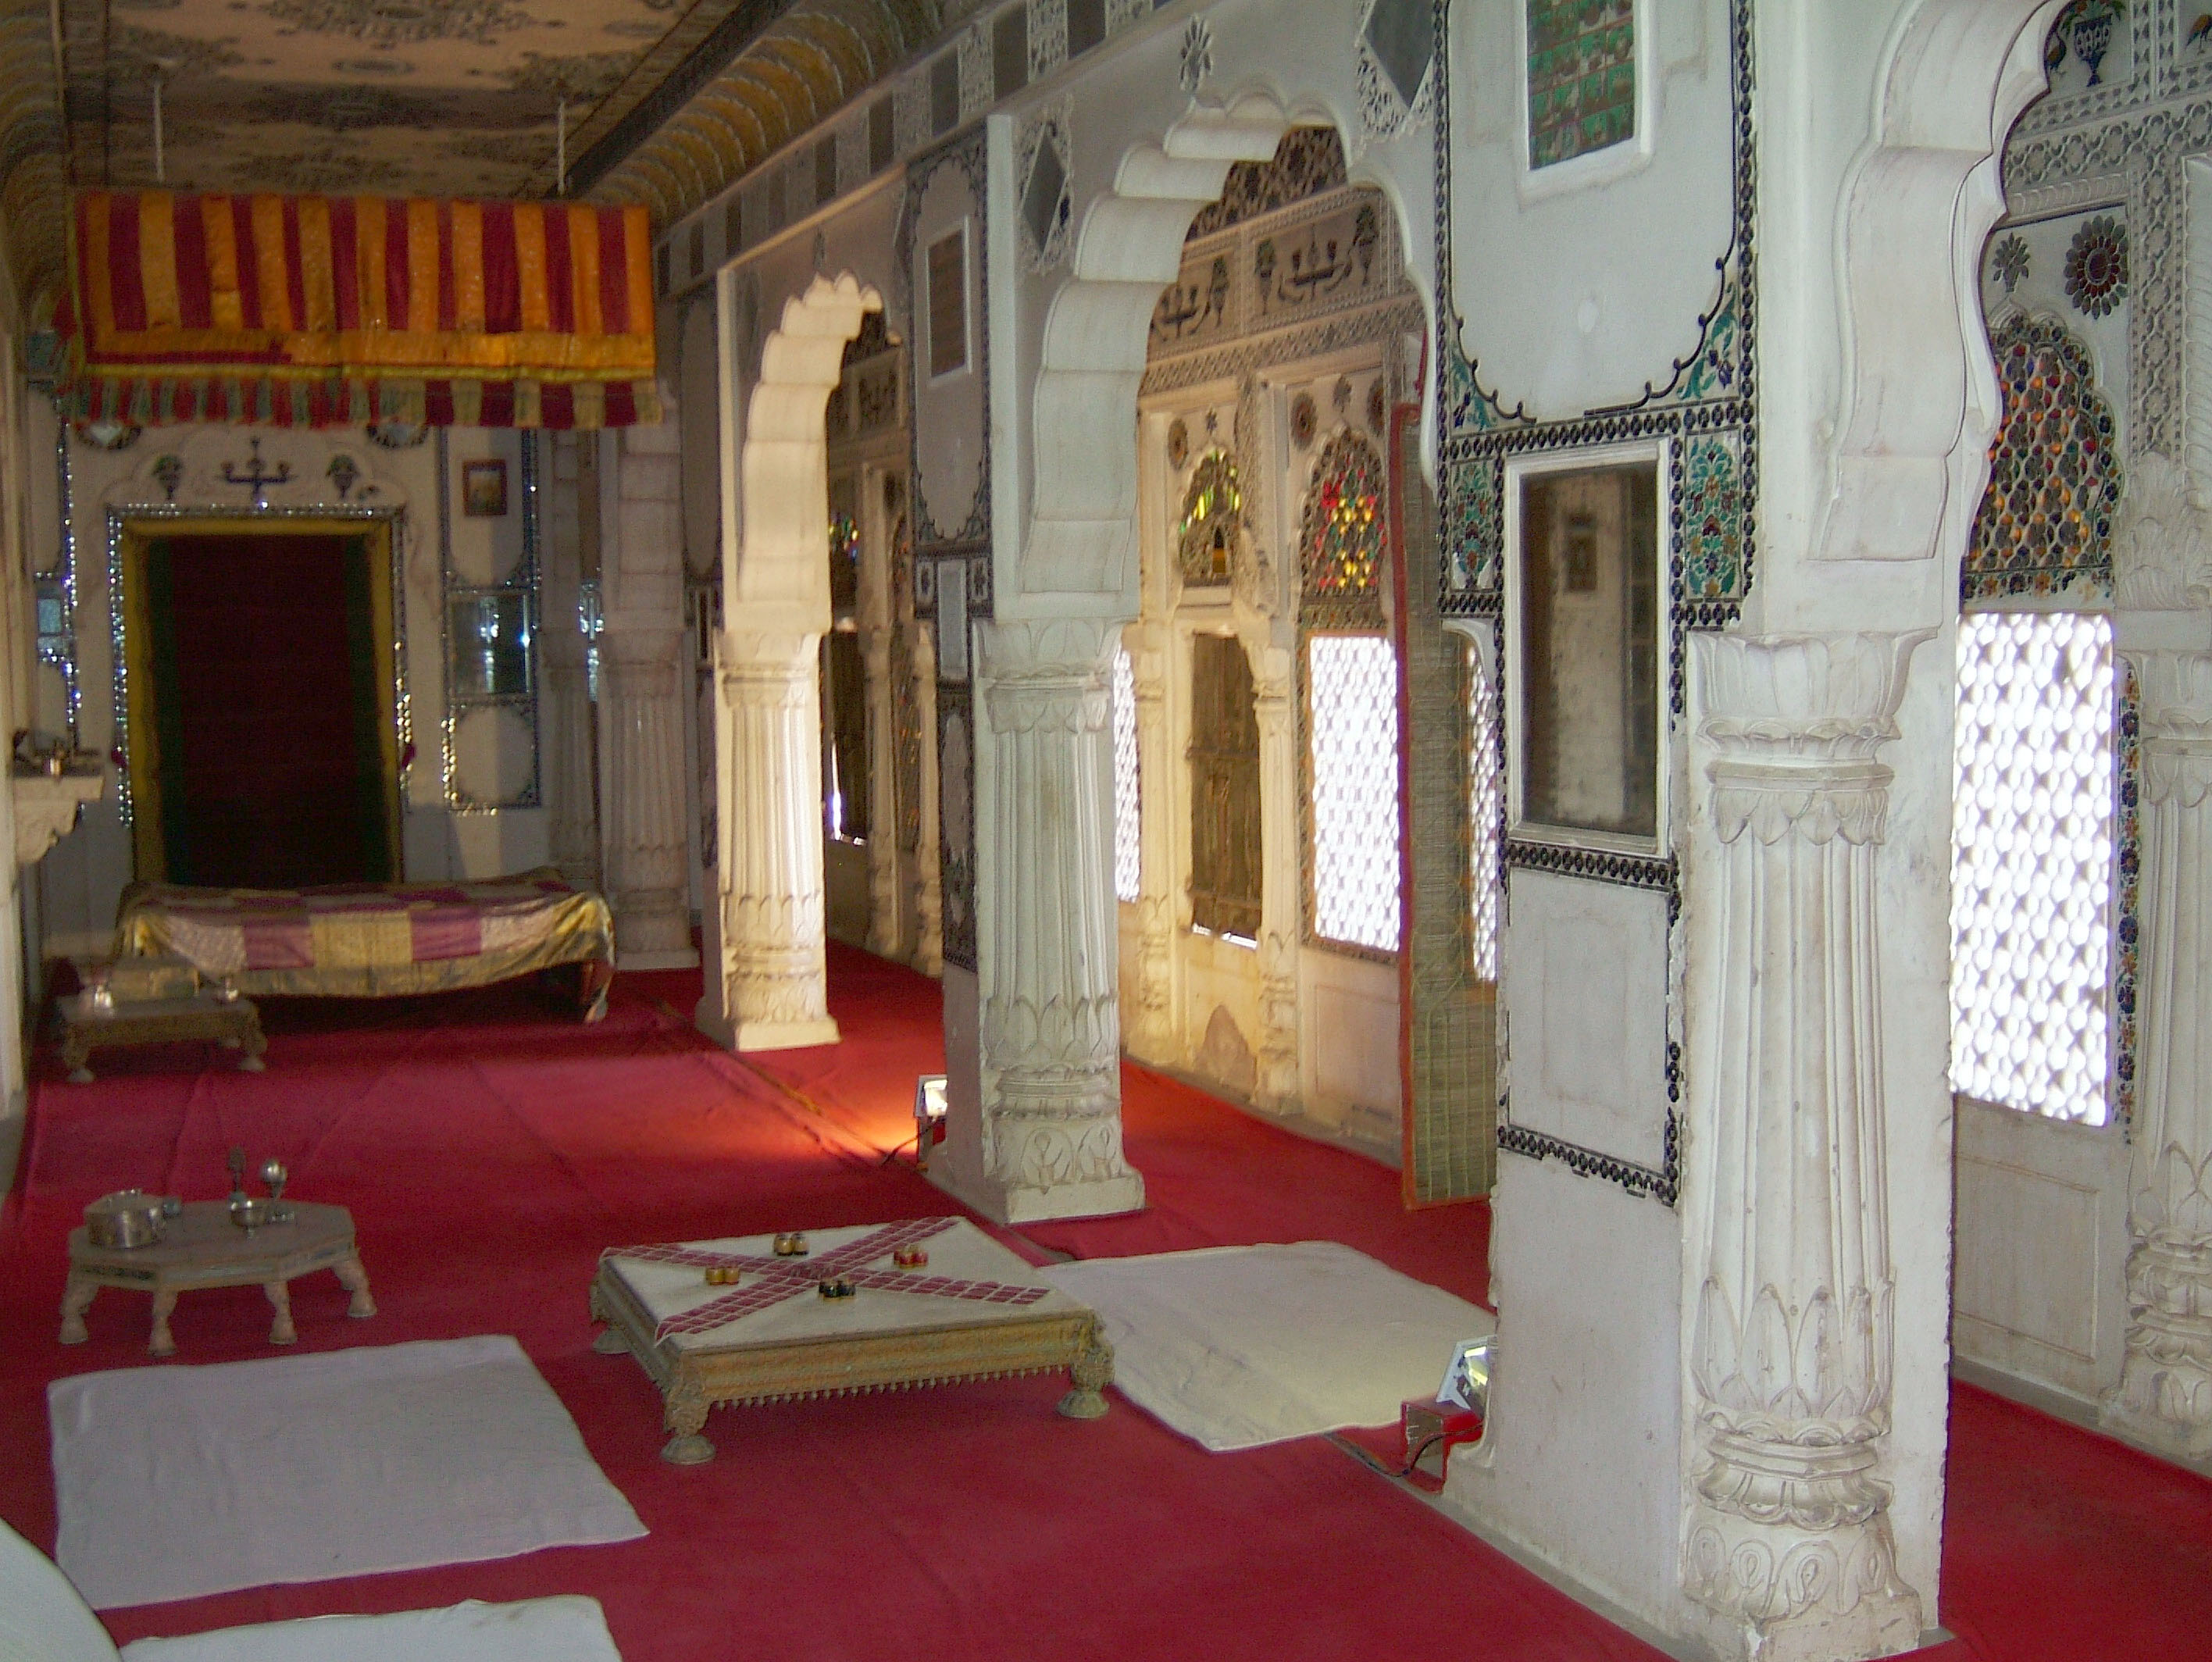 Rajasthan Jodhpur Mehrangarh Fort Period rooms India Apr 2004 05